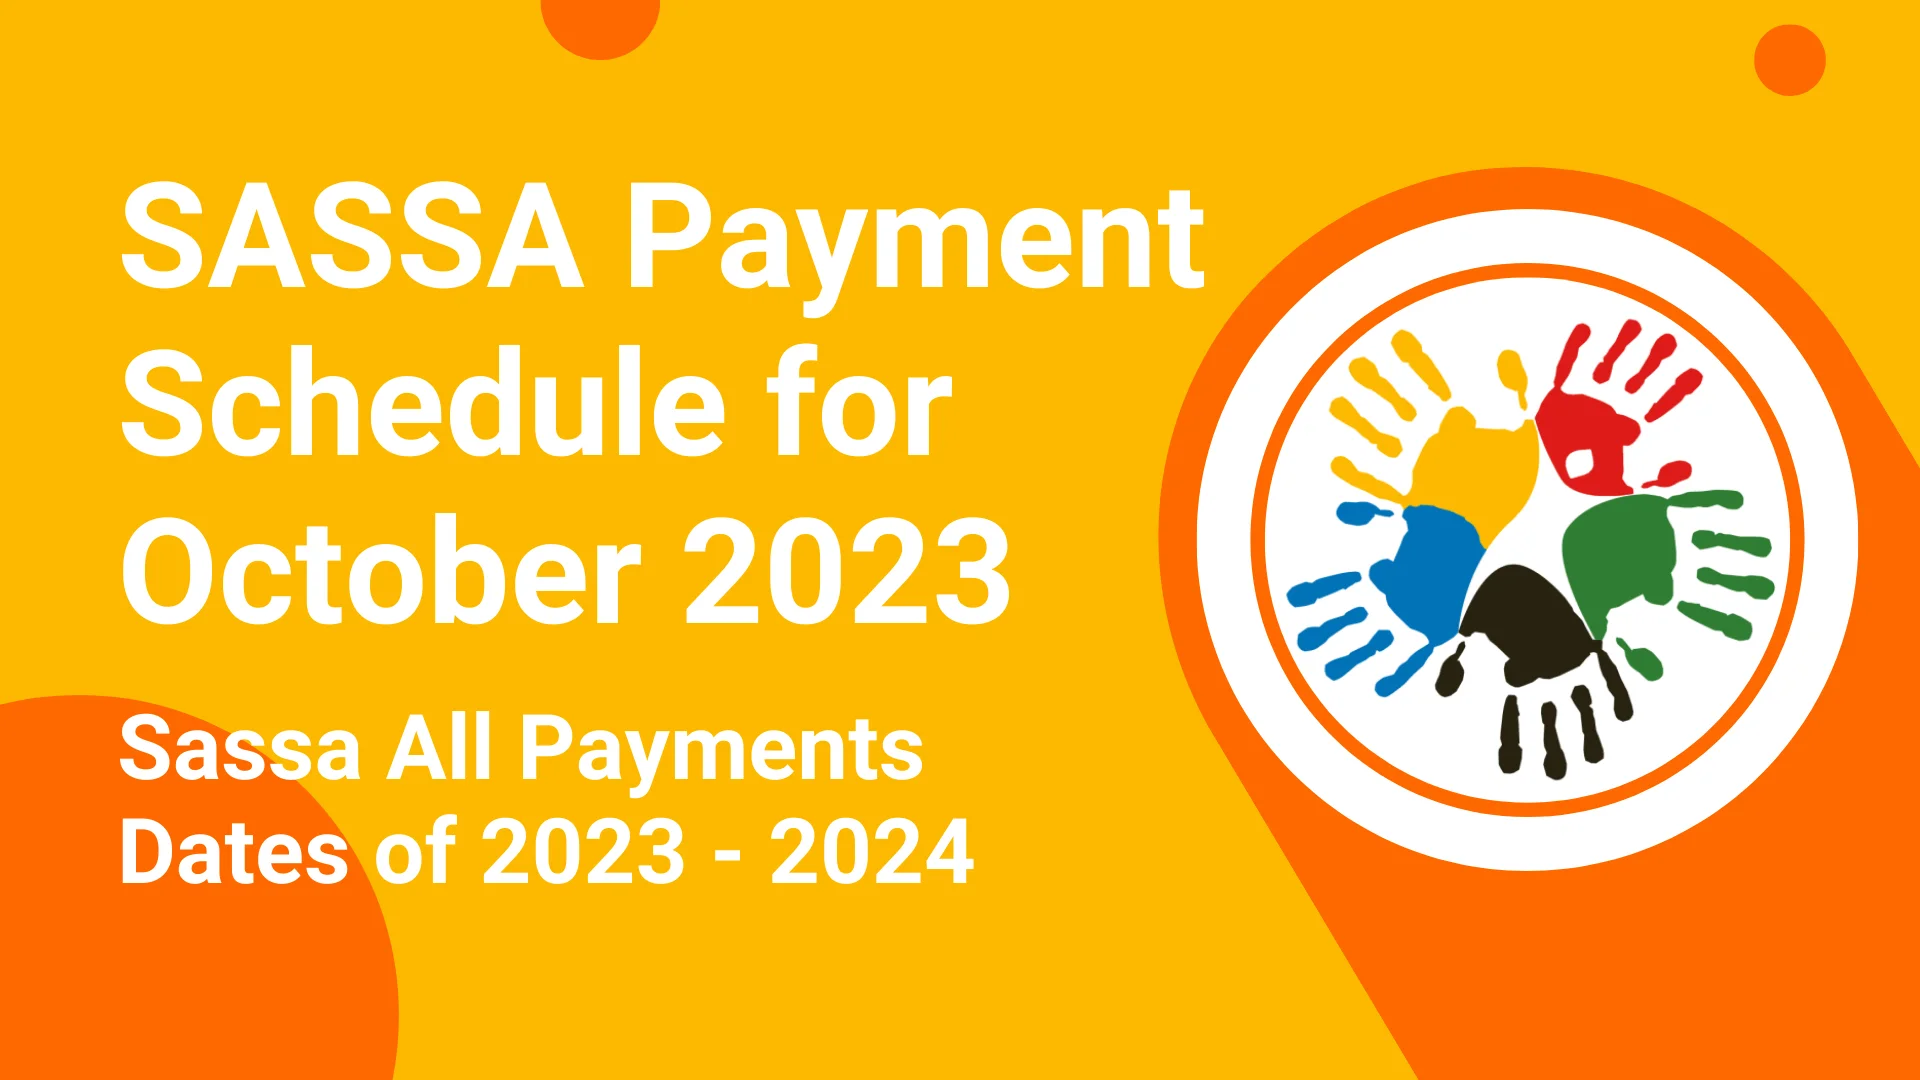 SASSA Payment Schedule for October 2023